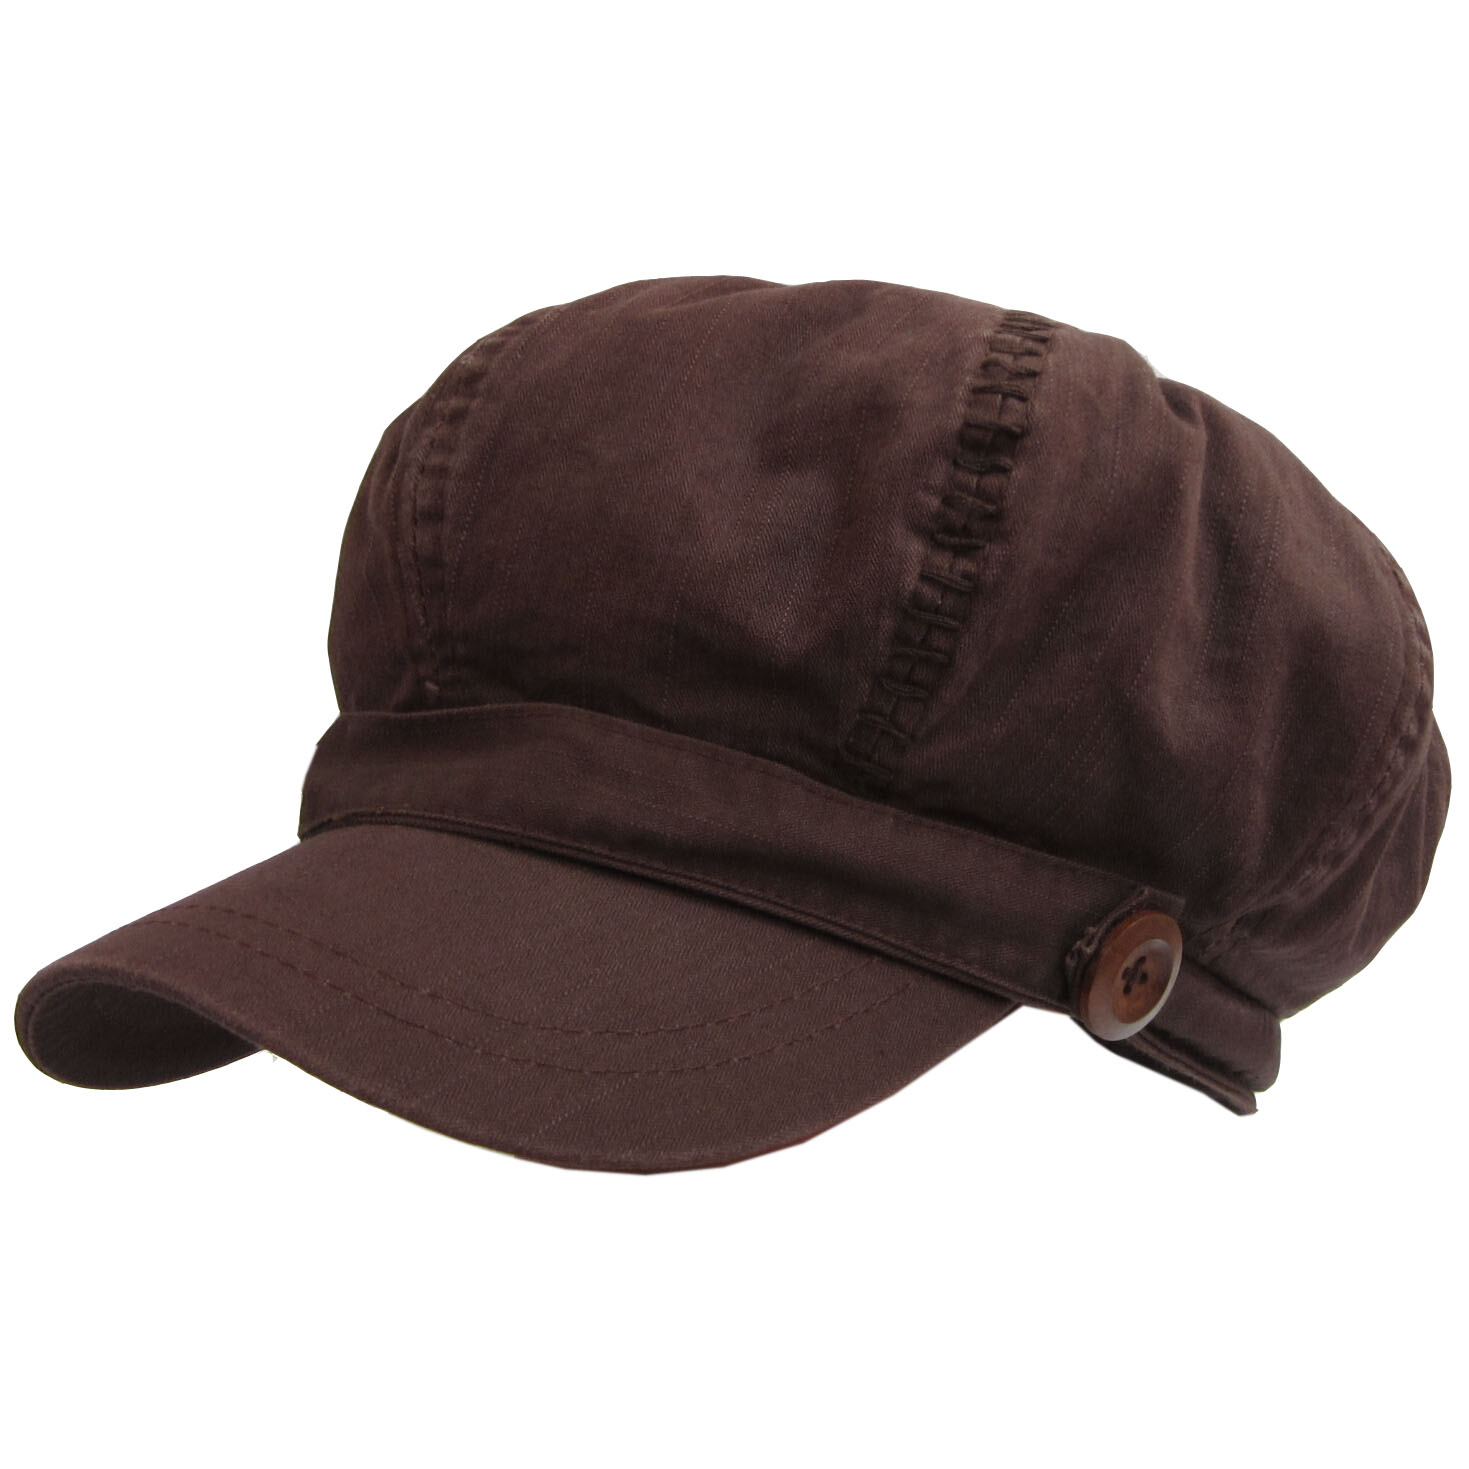 J020xa cap male women's summer beret octagonal cap painter cap denim newsboy cap